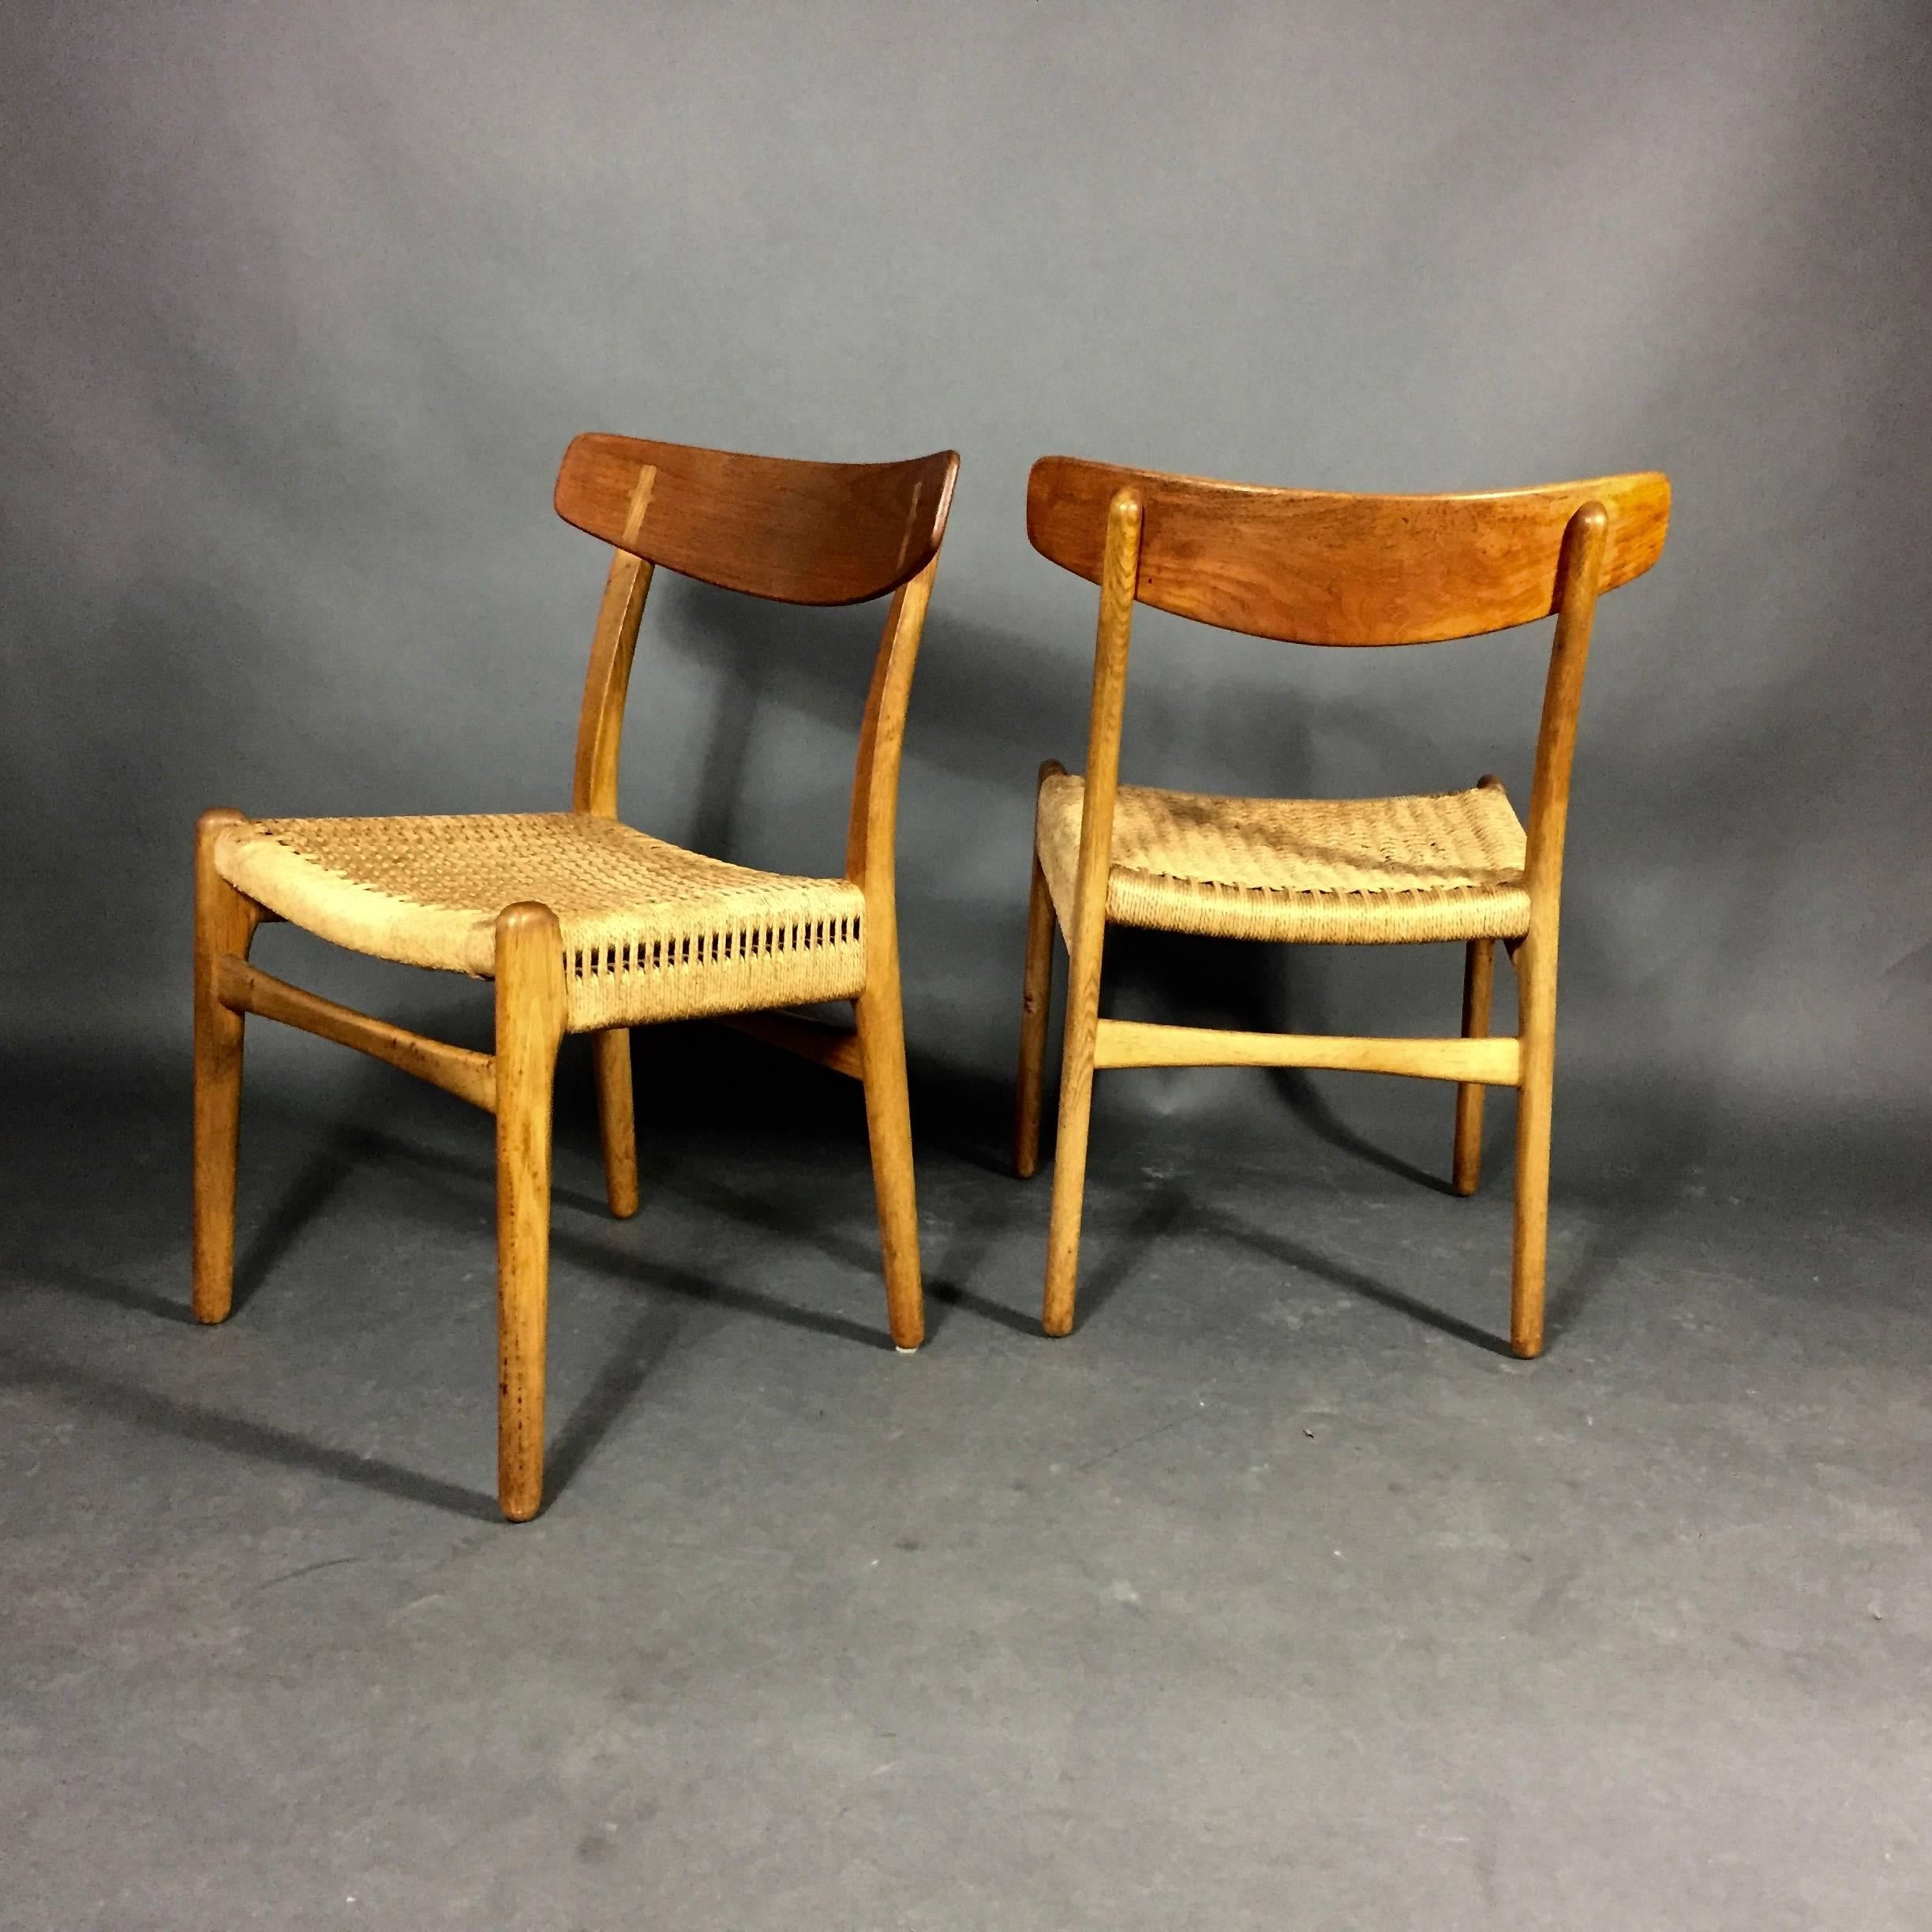 Danish Hans J. Wegner CH23 Dining Chairs, Teak and Paperboard, Denmark, 1950s